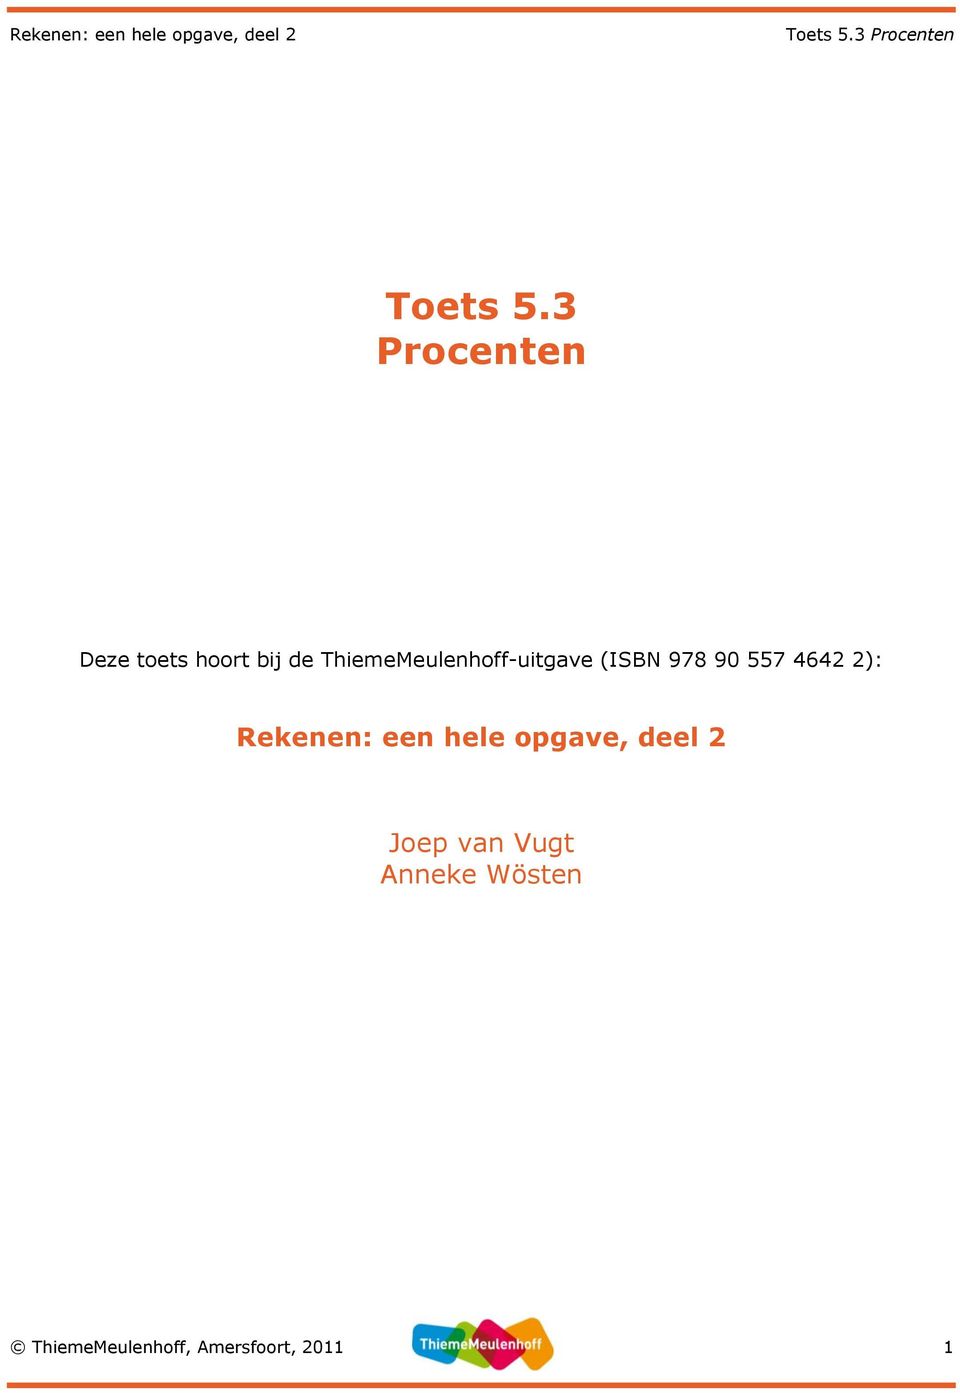 ThiemeMeulenhoff-uitgave (ISBN 978 90 557 4642